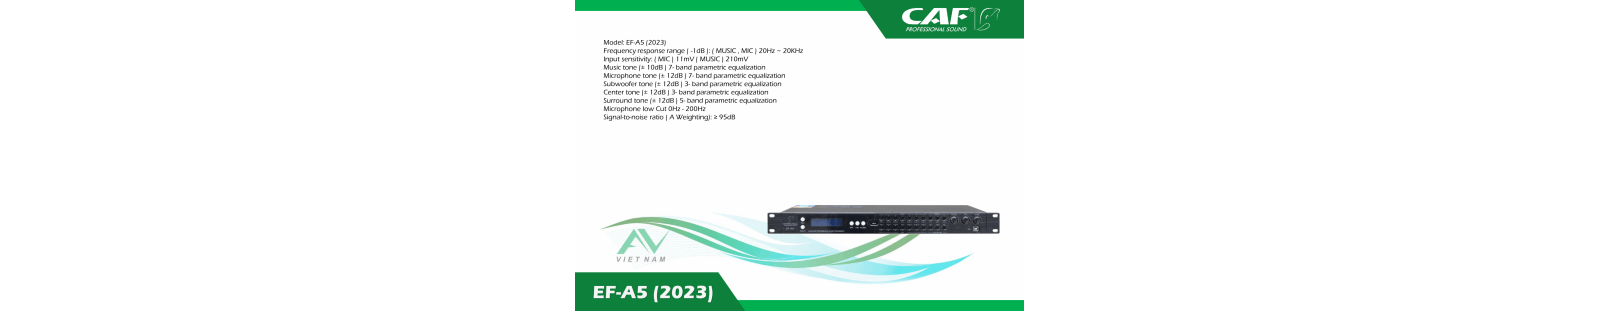 CAF EF-A5 (2023)